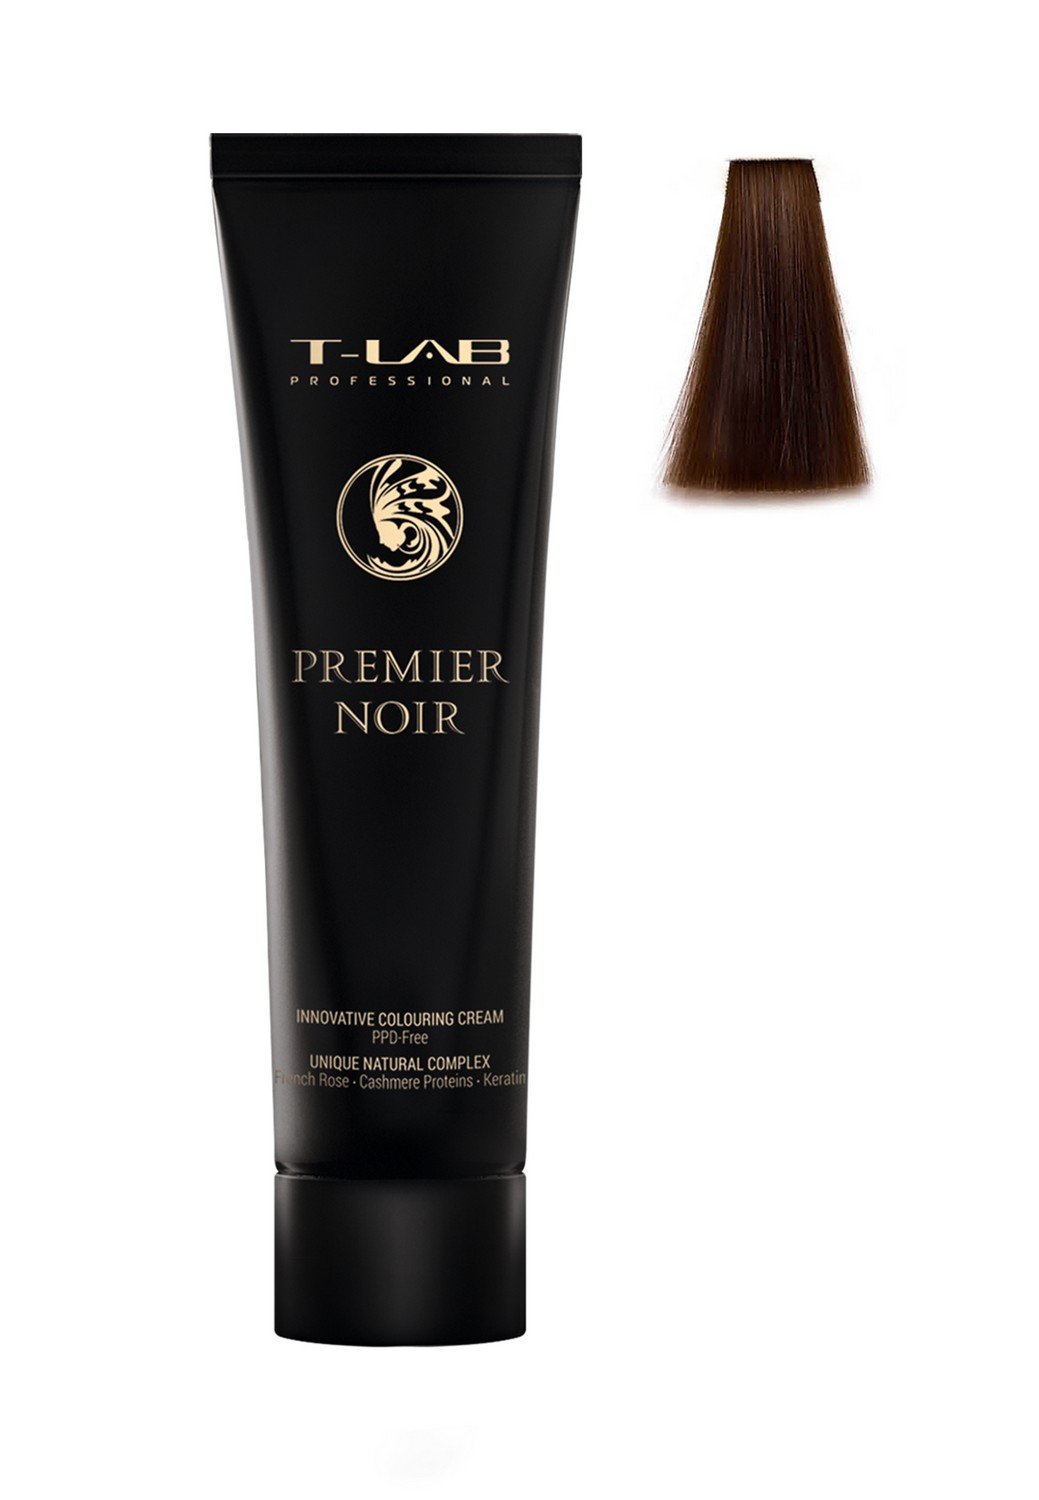 Крем-краска T-LAB Professional Premier Noir colouring cream, оттенок 5.15 (light ash mahogany brown) - фото 2